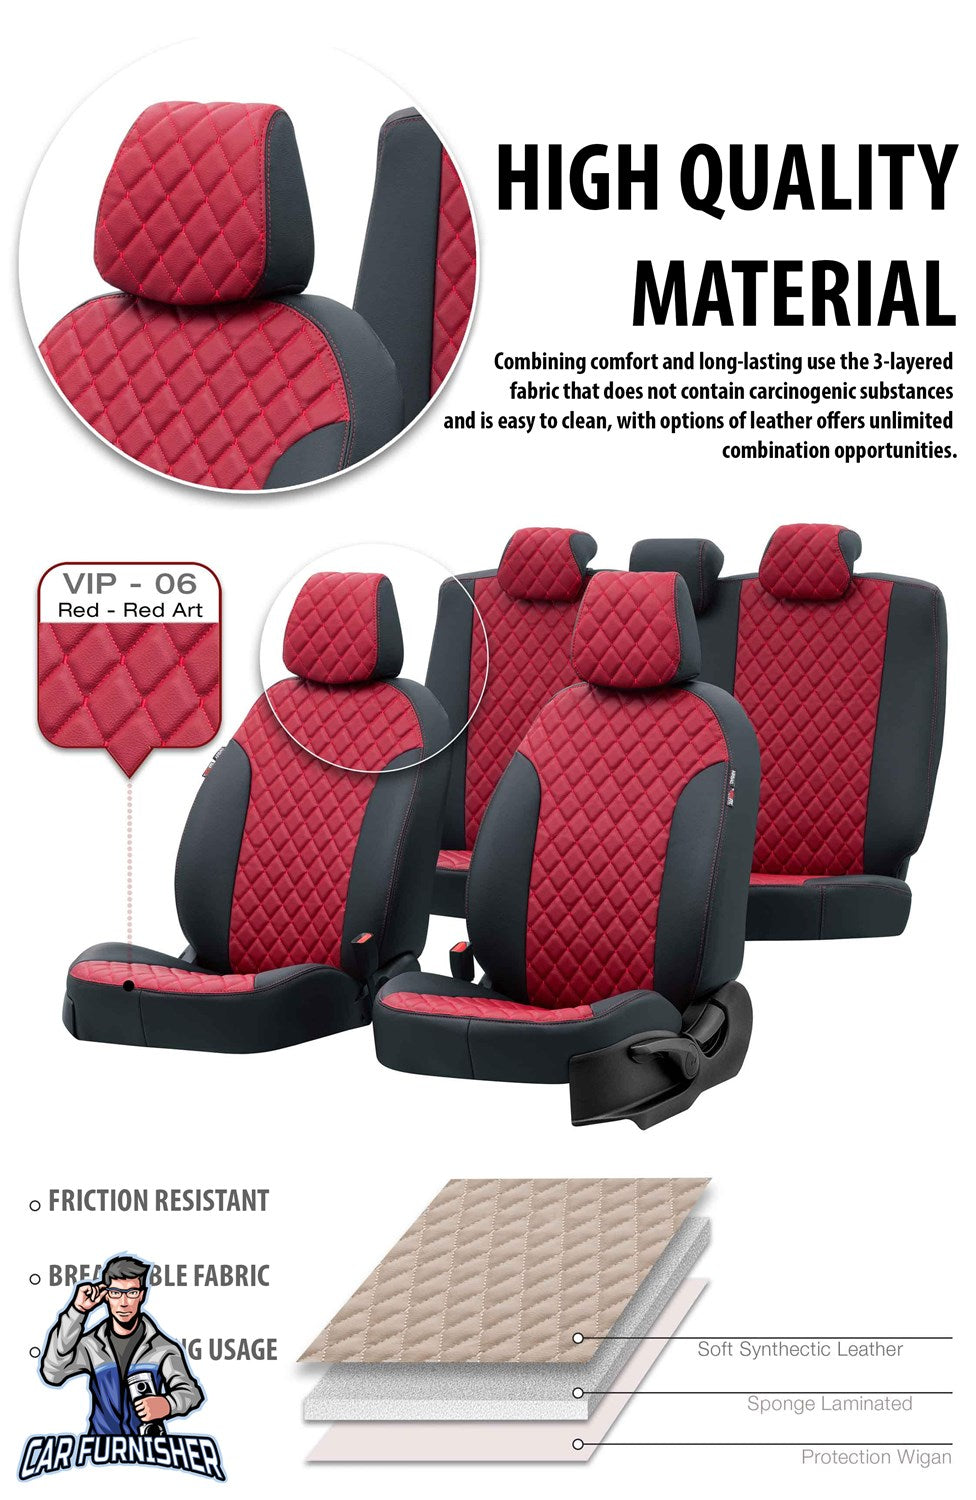 Opel Meriva Seat Covers Madrid Leather Design Dark Red Leather